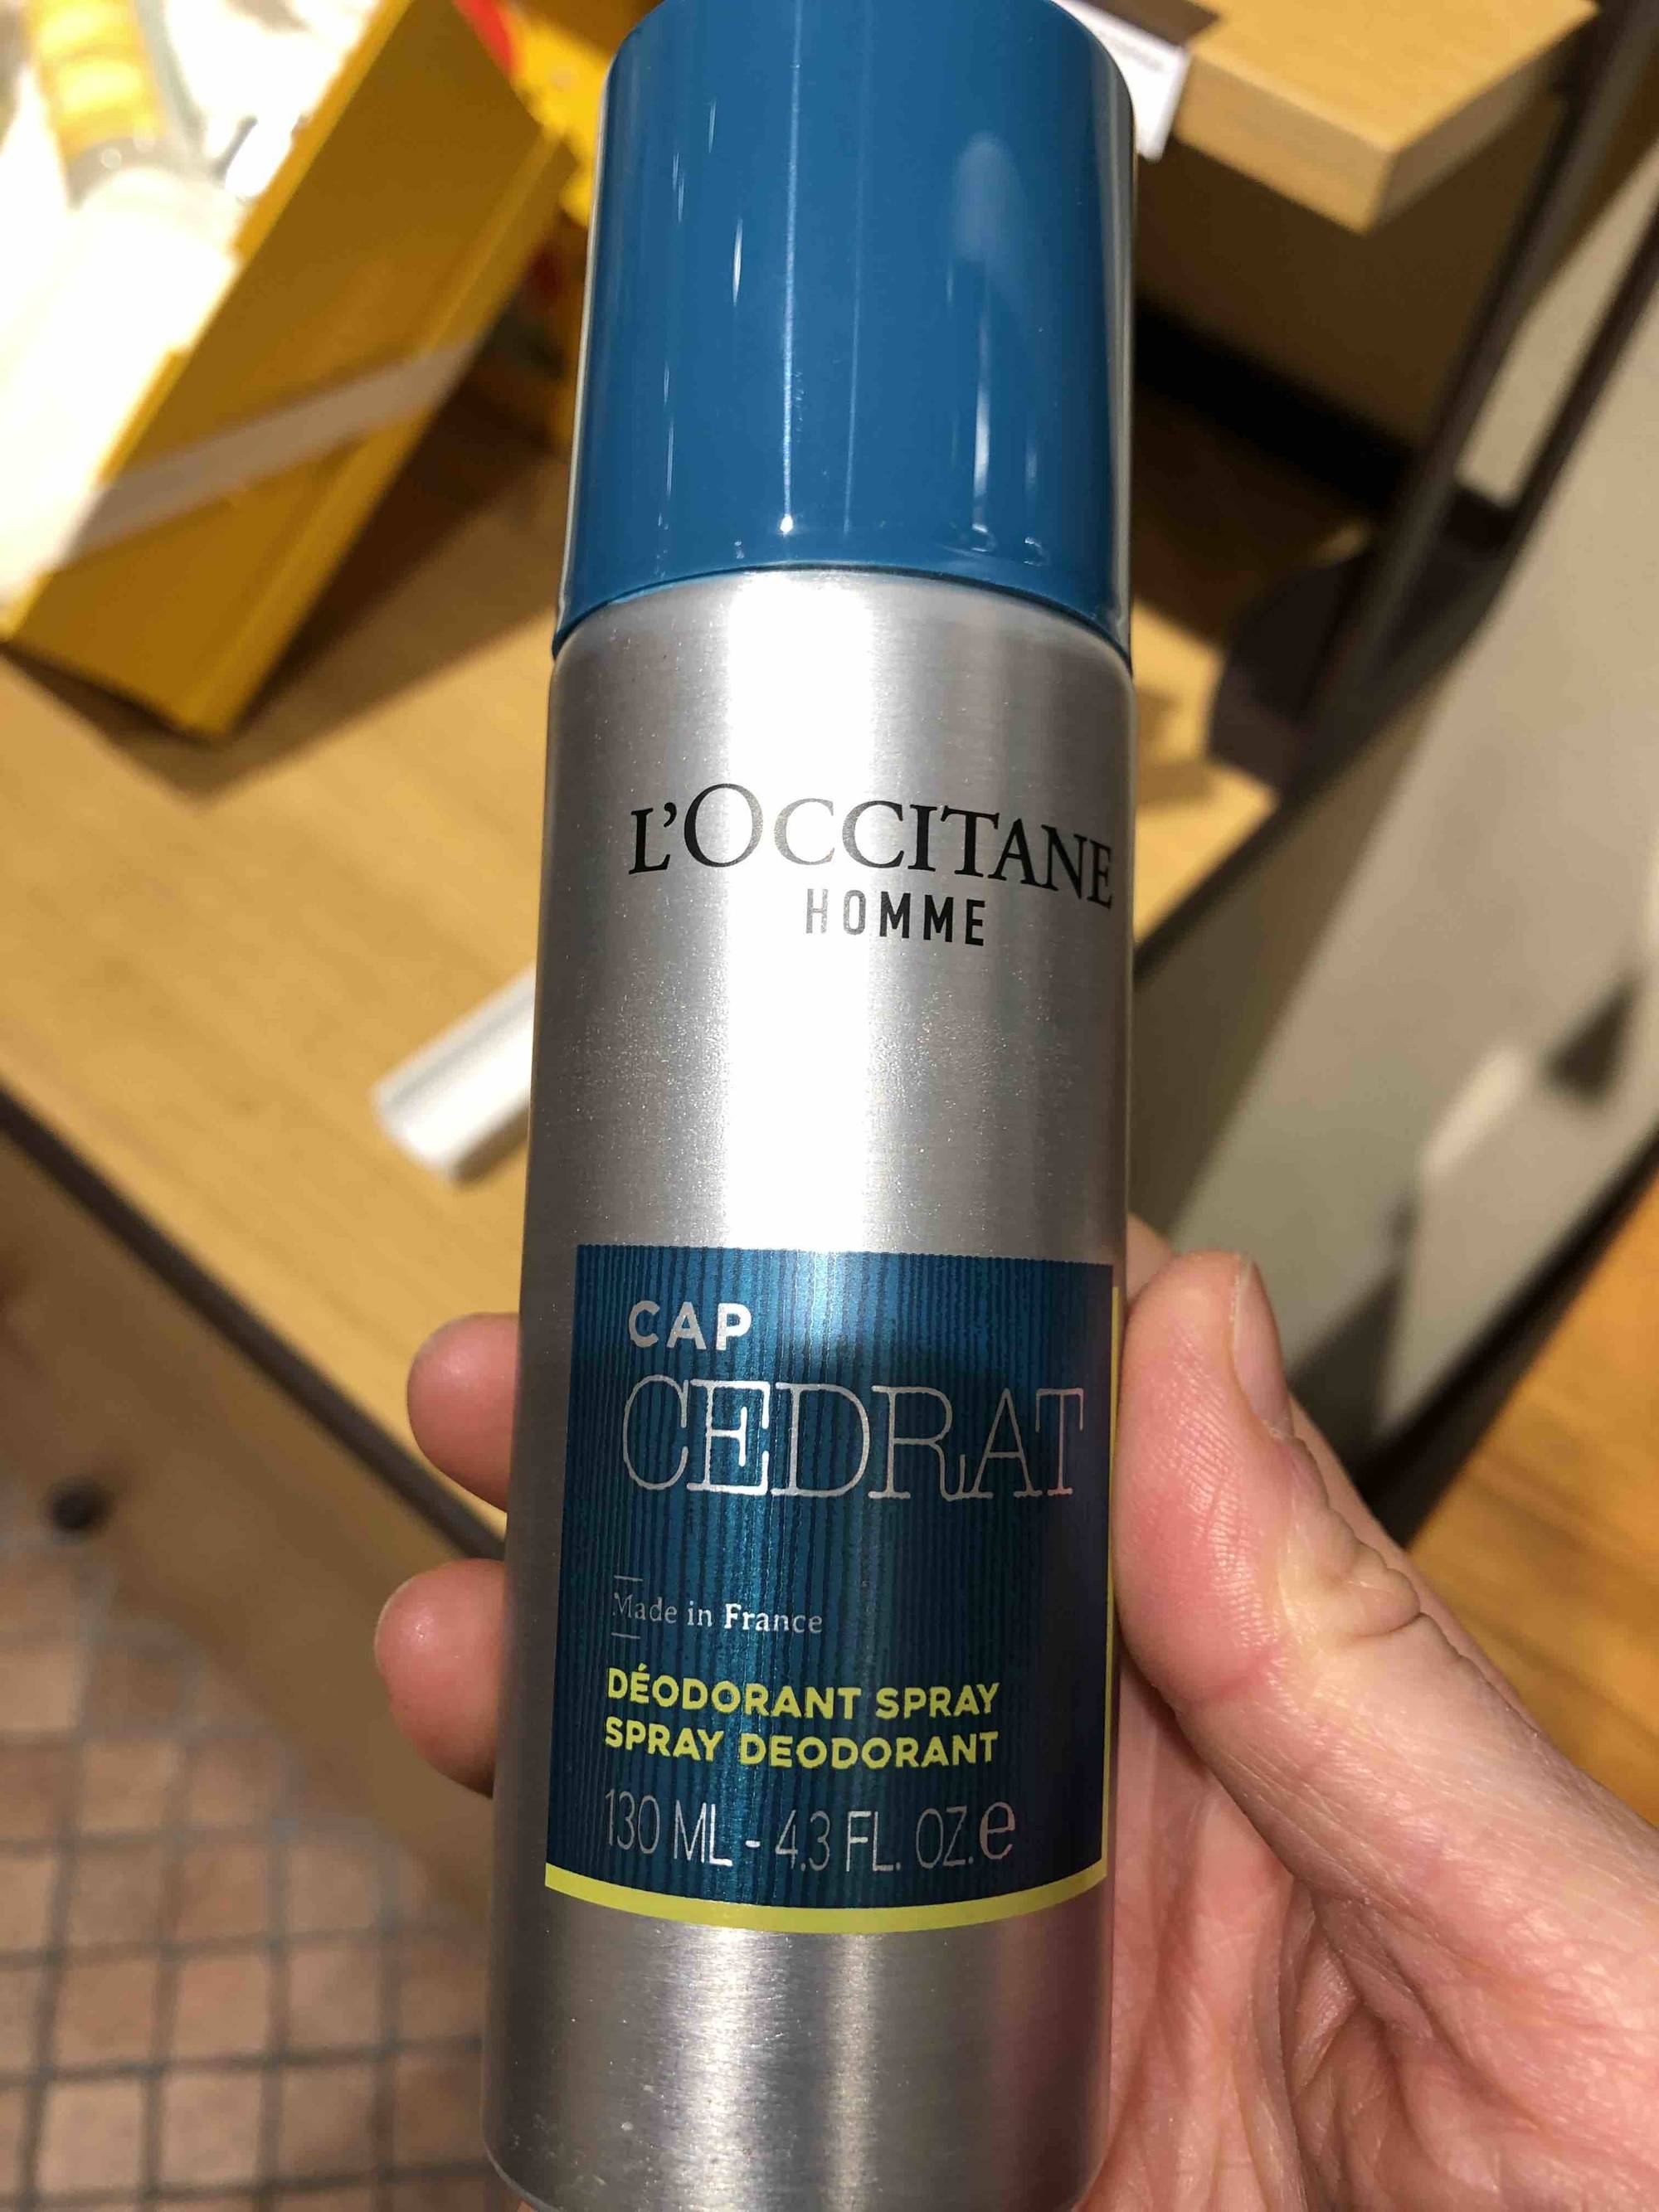 L'OCCITANE - Homme Cap cedrat - Déodorant spray